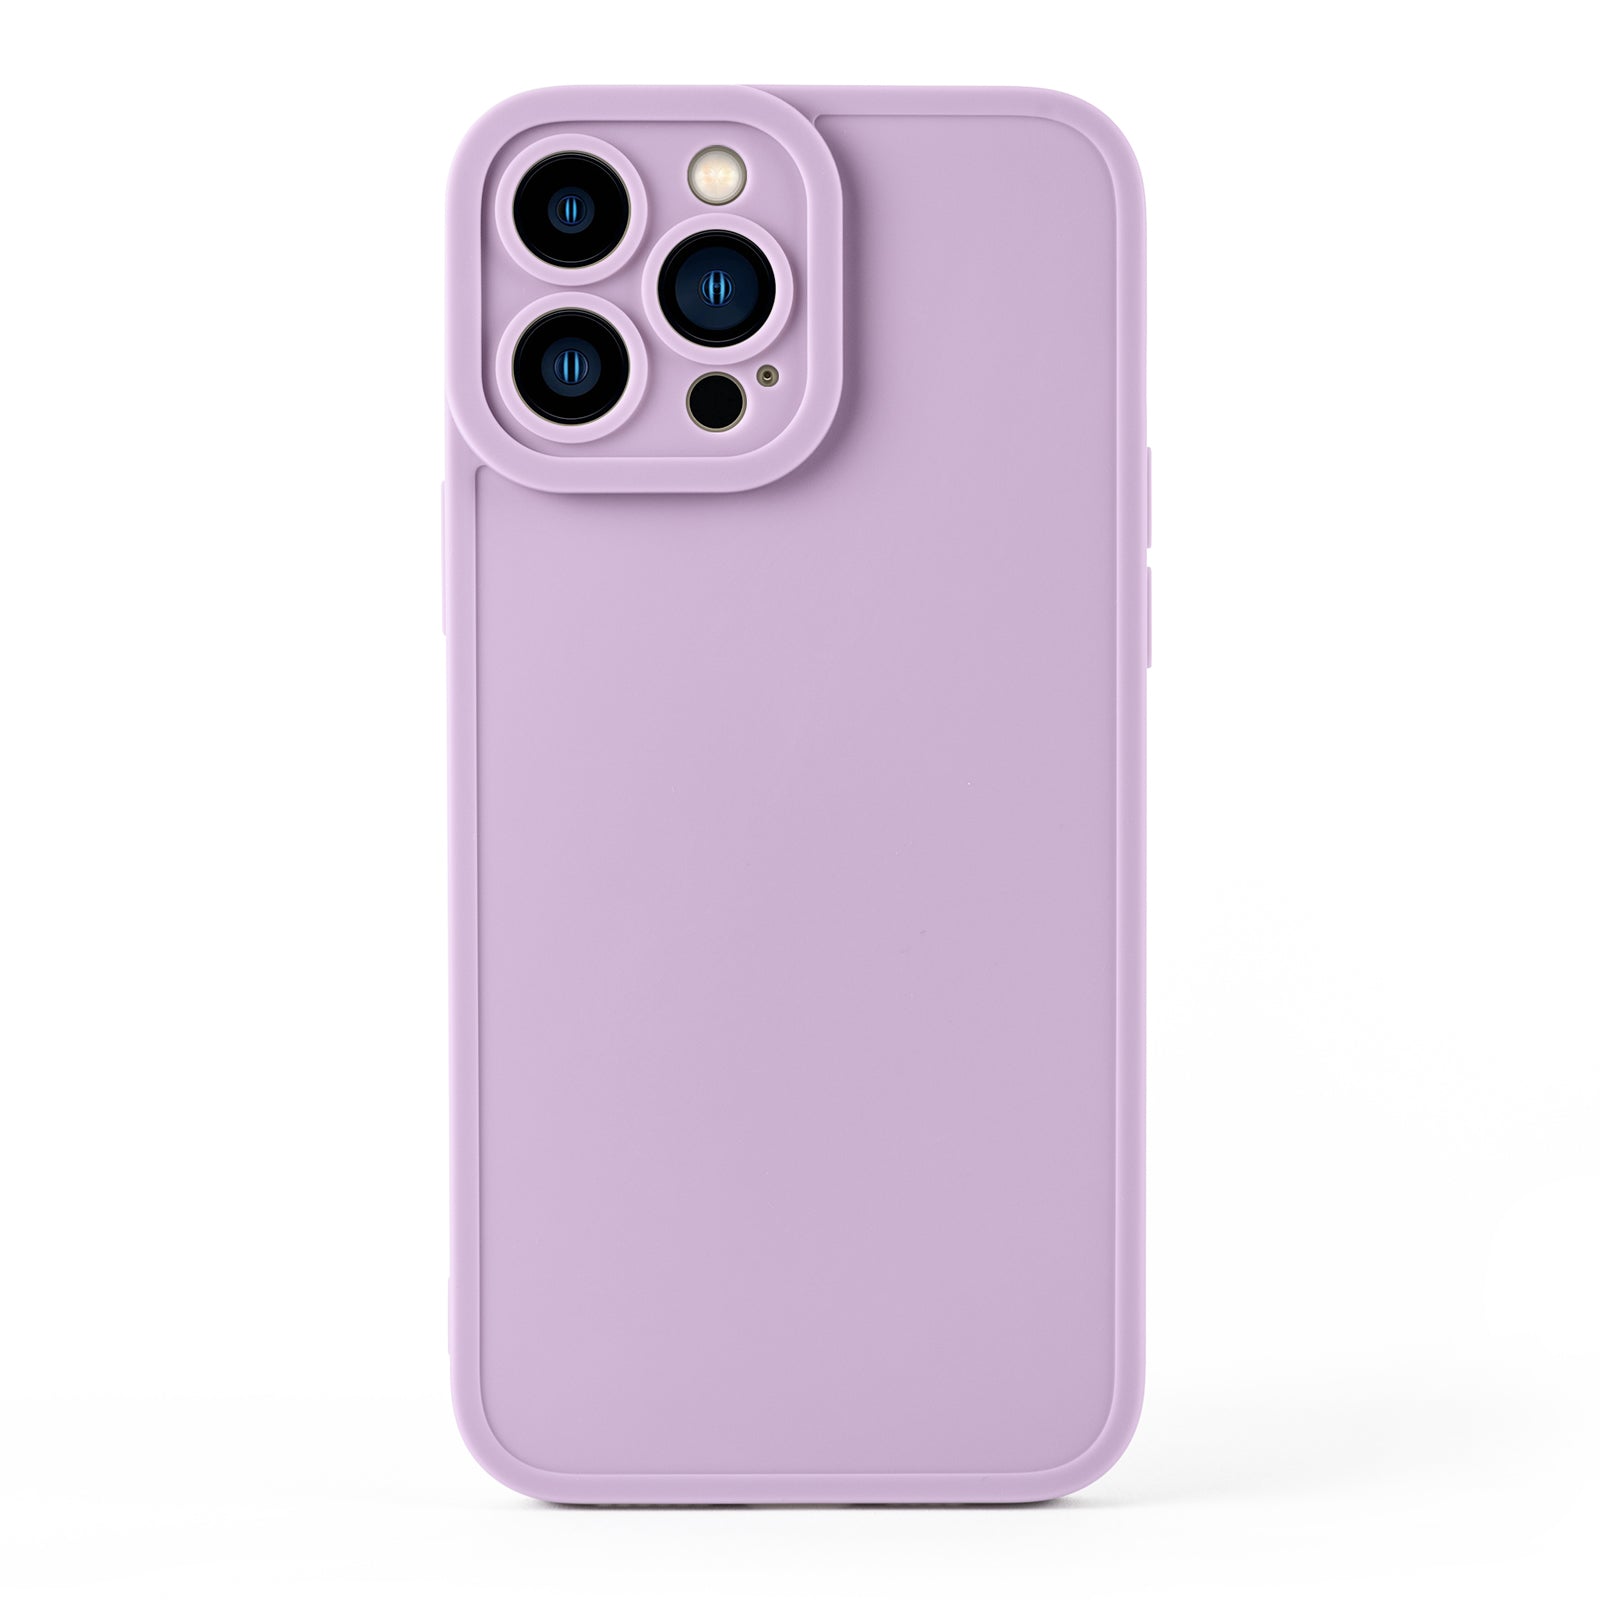 Silicone iPhone Case - Lavender